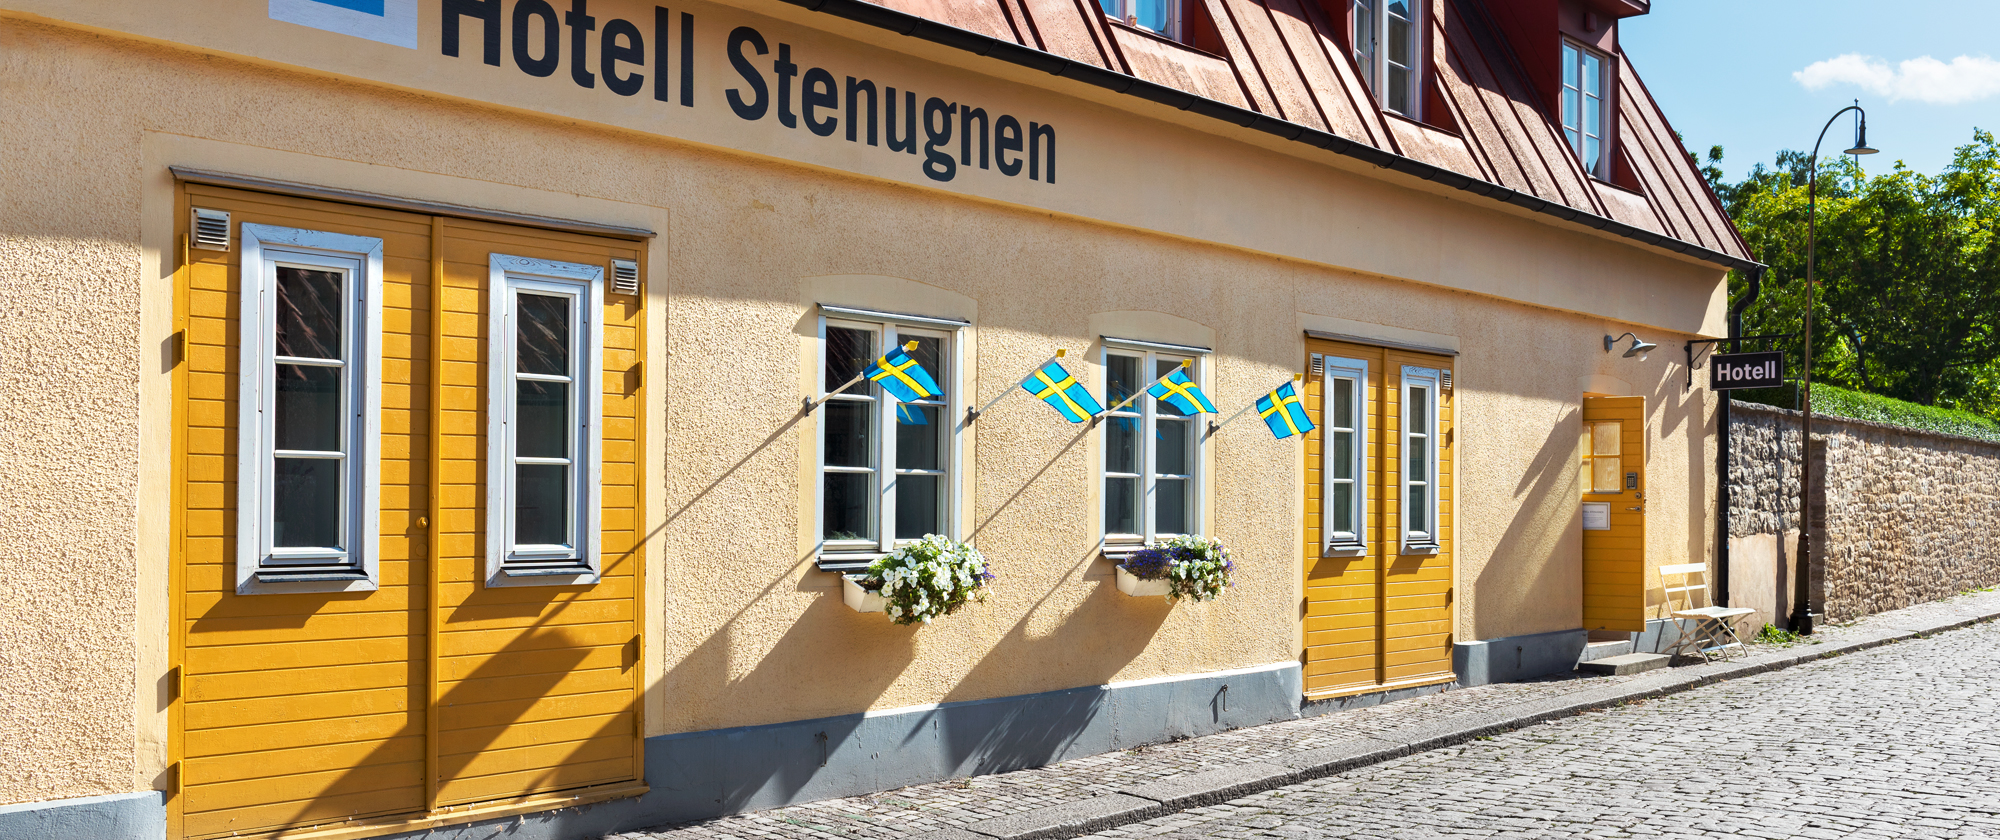 Habitaciones - Hotell Stenugnen